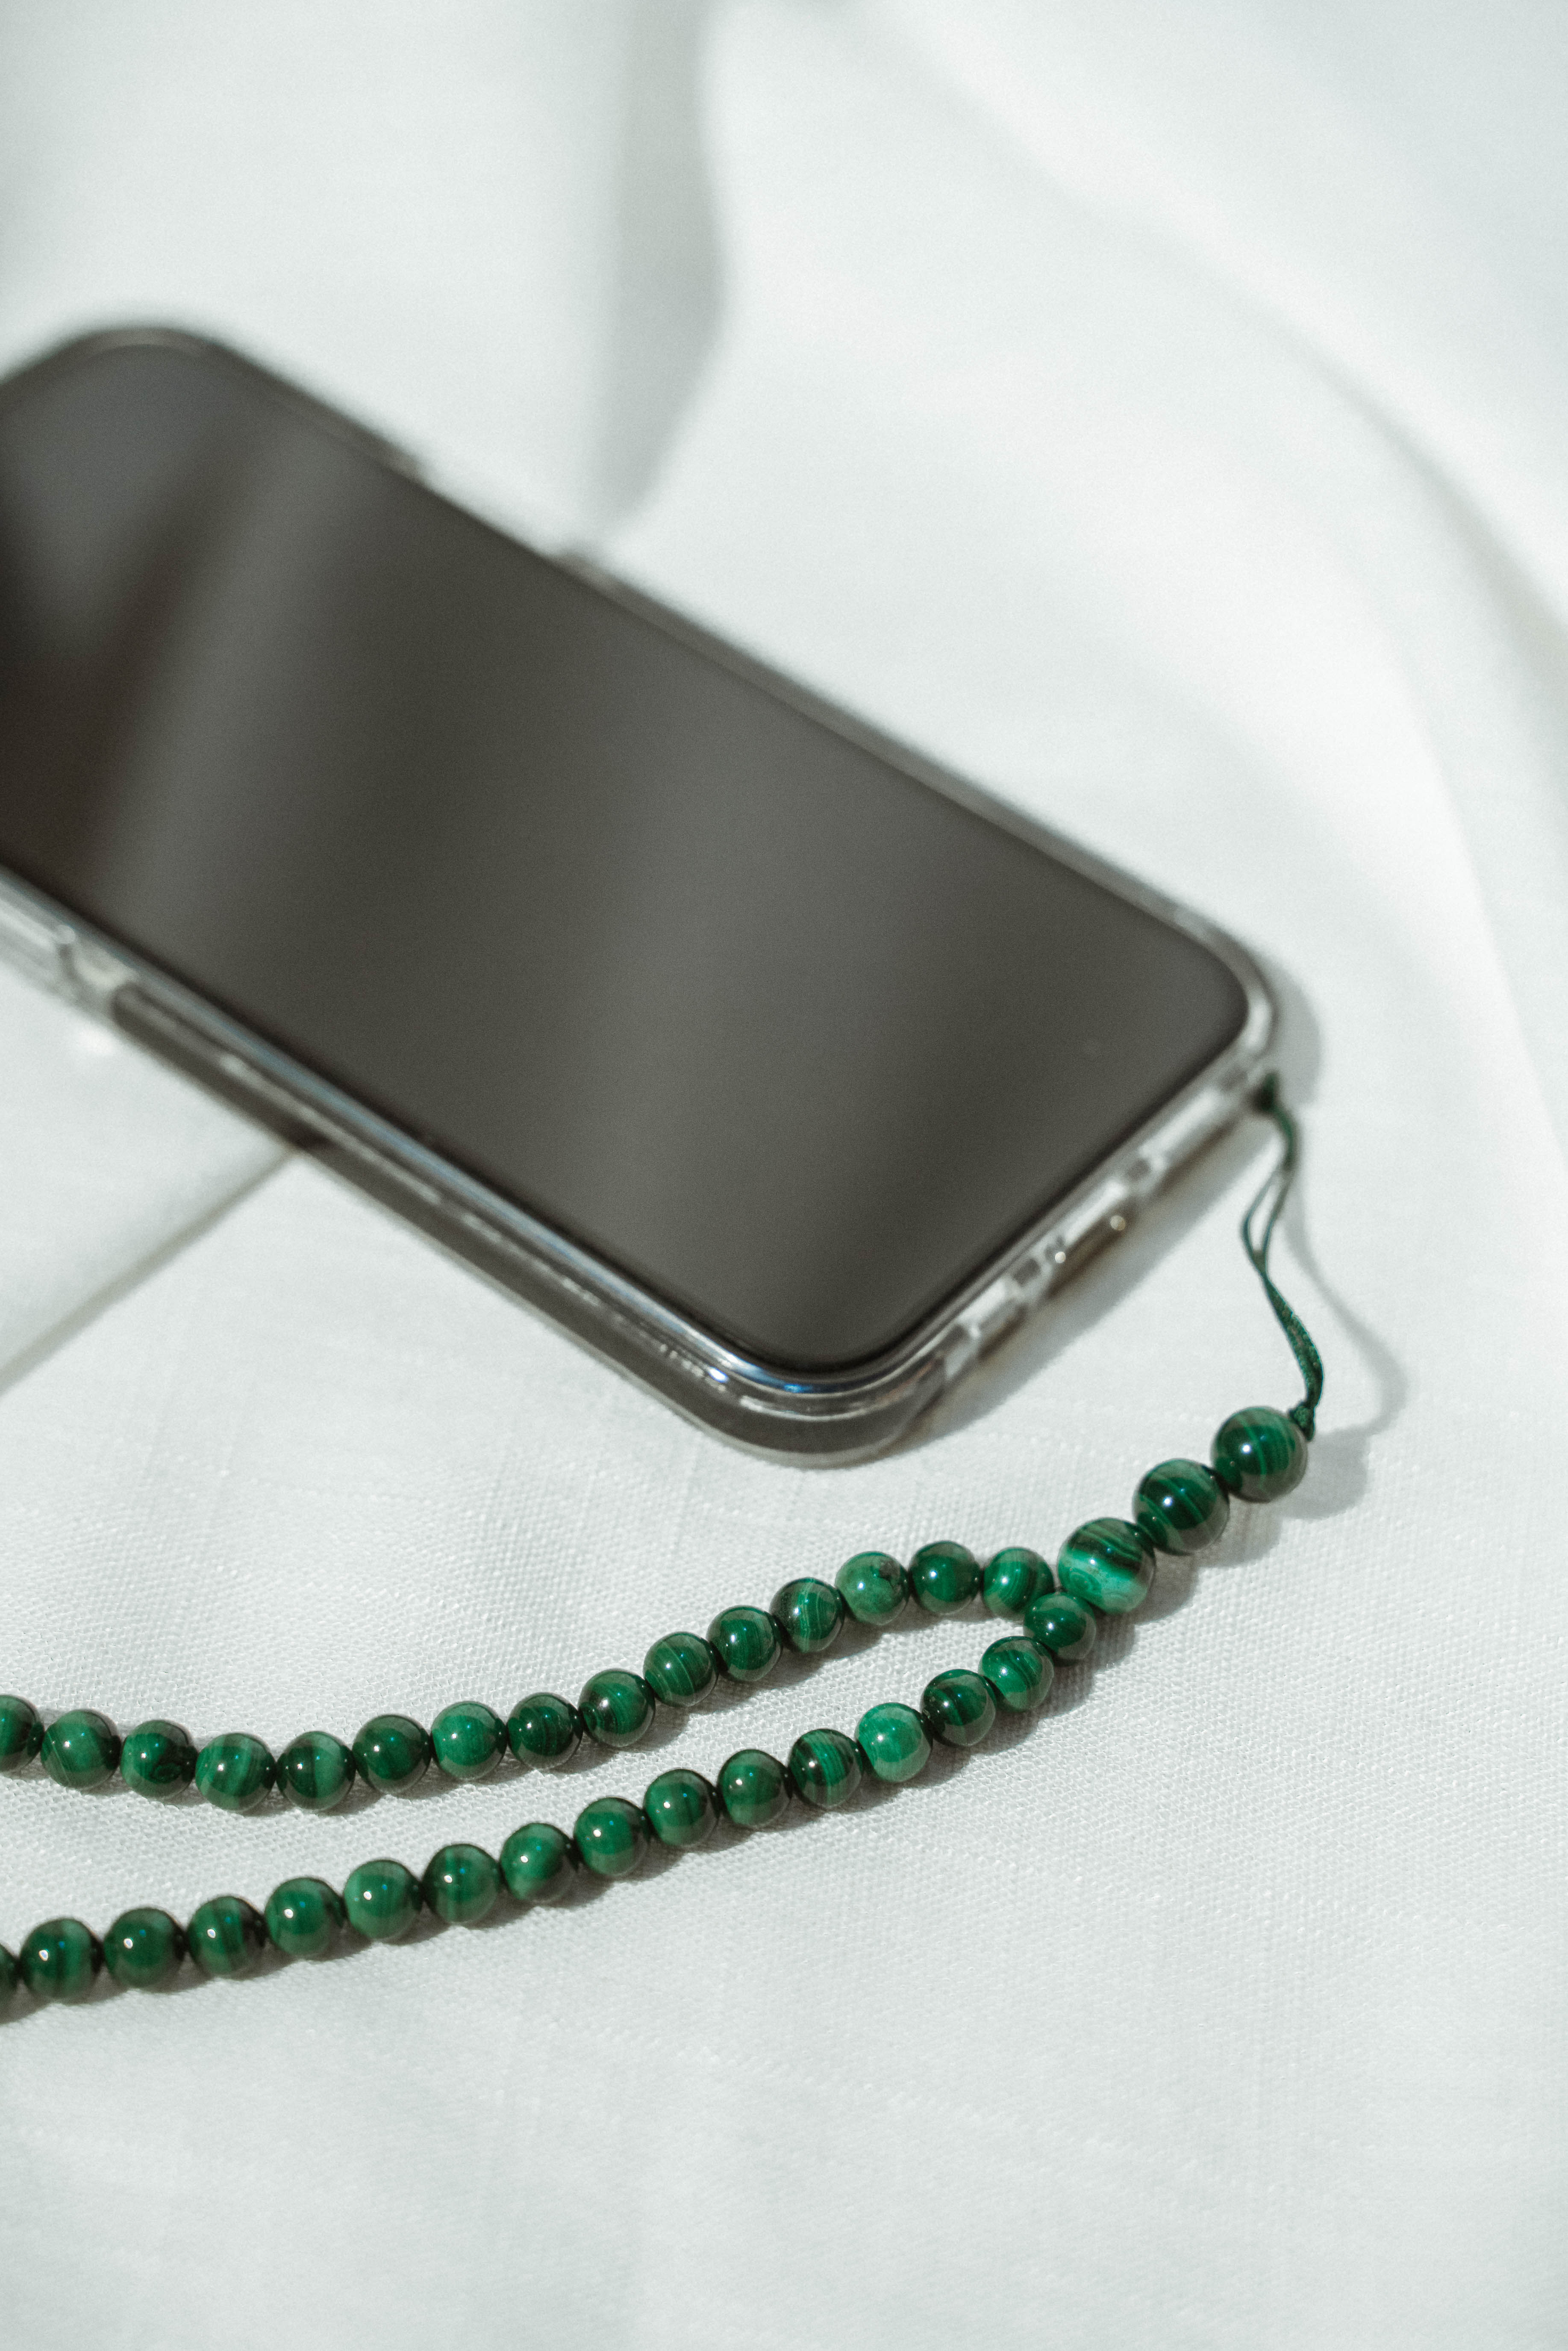 Flexible Hanging Neck Lazy Necklace Mobile Phone Holder-Black | BIG W